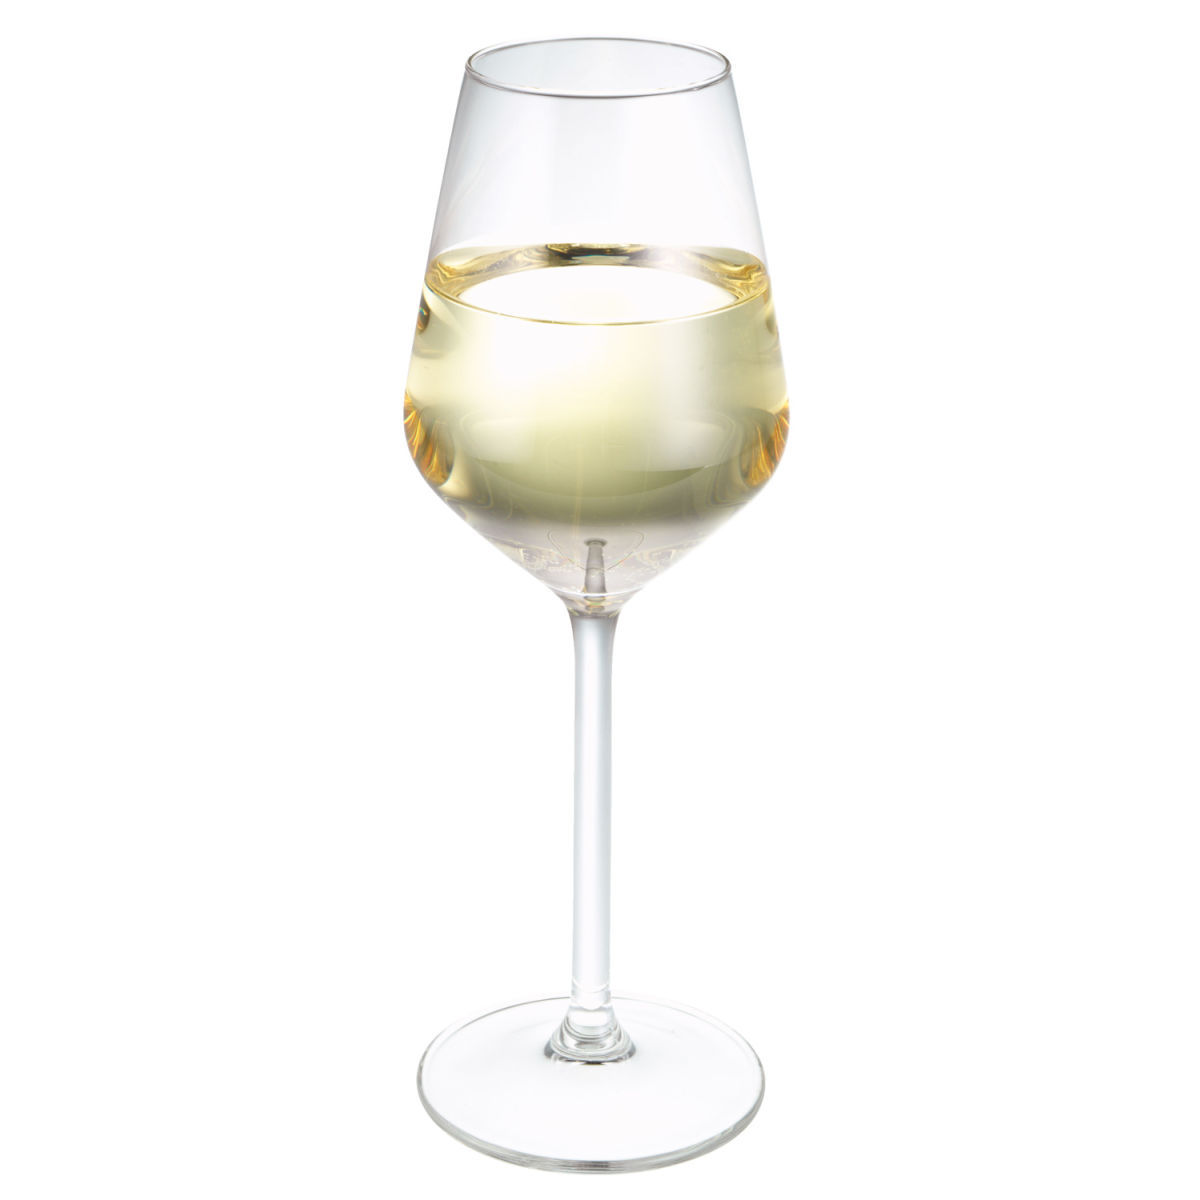 Royal leerdam Witte wijnglas Carré met vulstreepje; 380ml, 5.8x21.7 cm (ØxH); transparant; 0.2 l vulstreepje, 6 stuk / verpakking